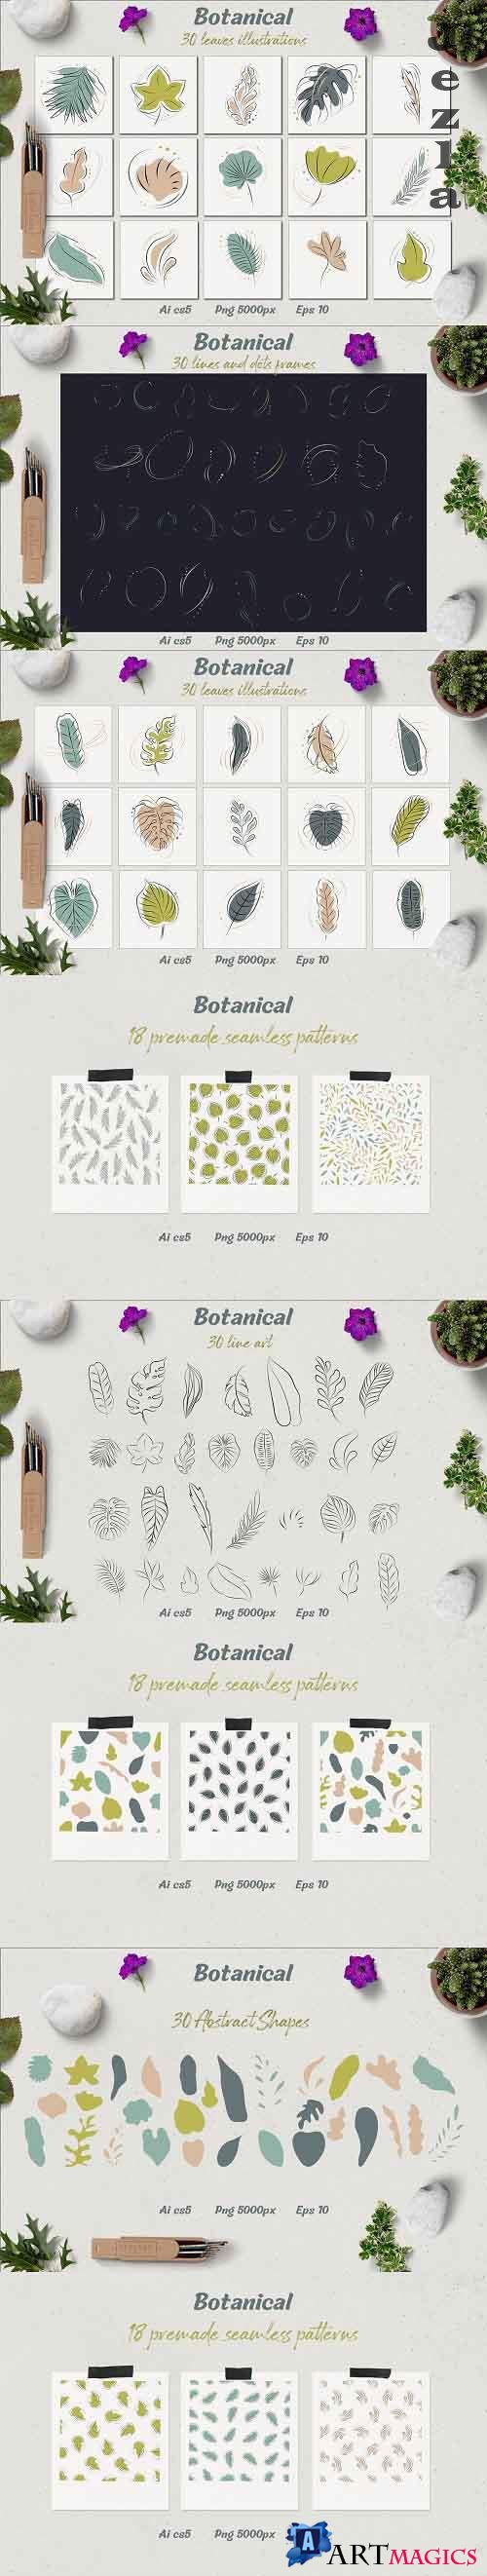 Botanical - leaves illustrations - 4824083